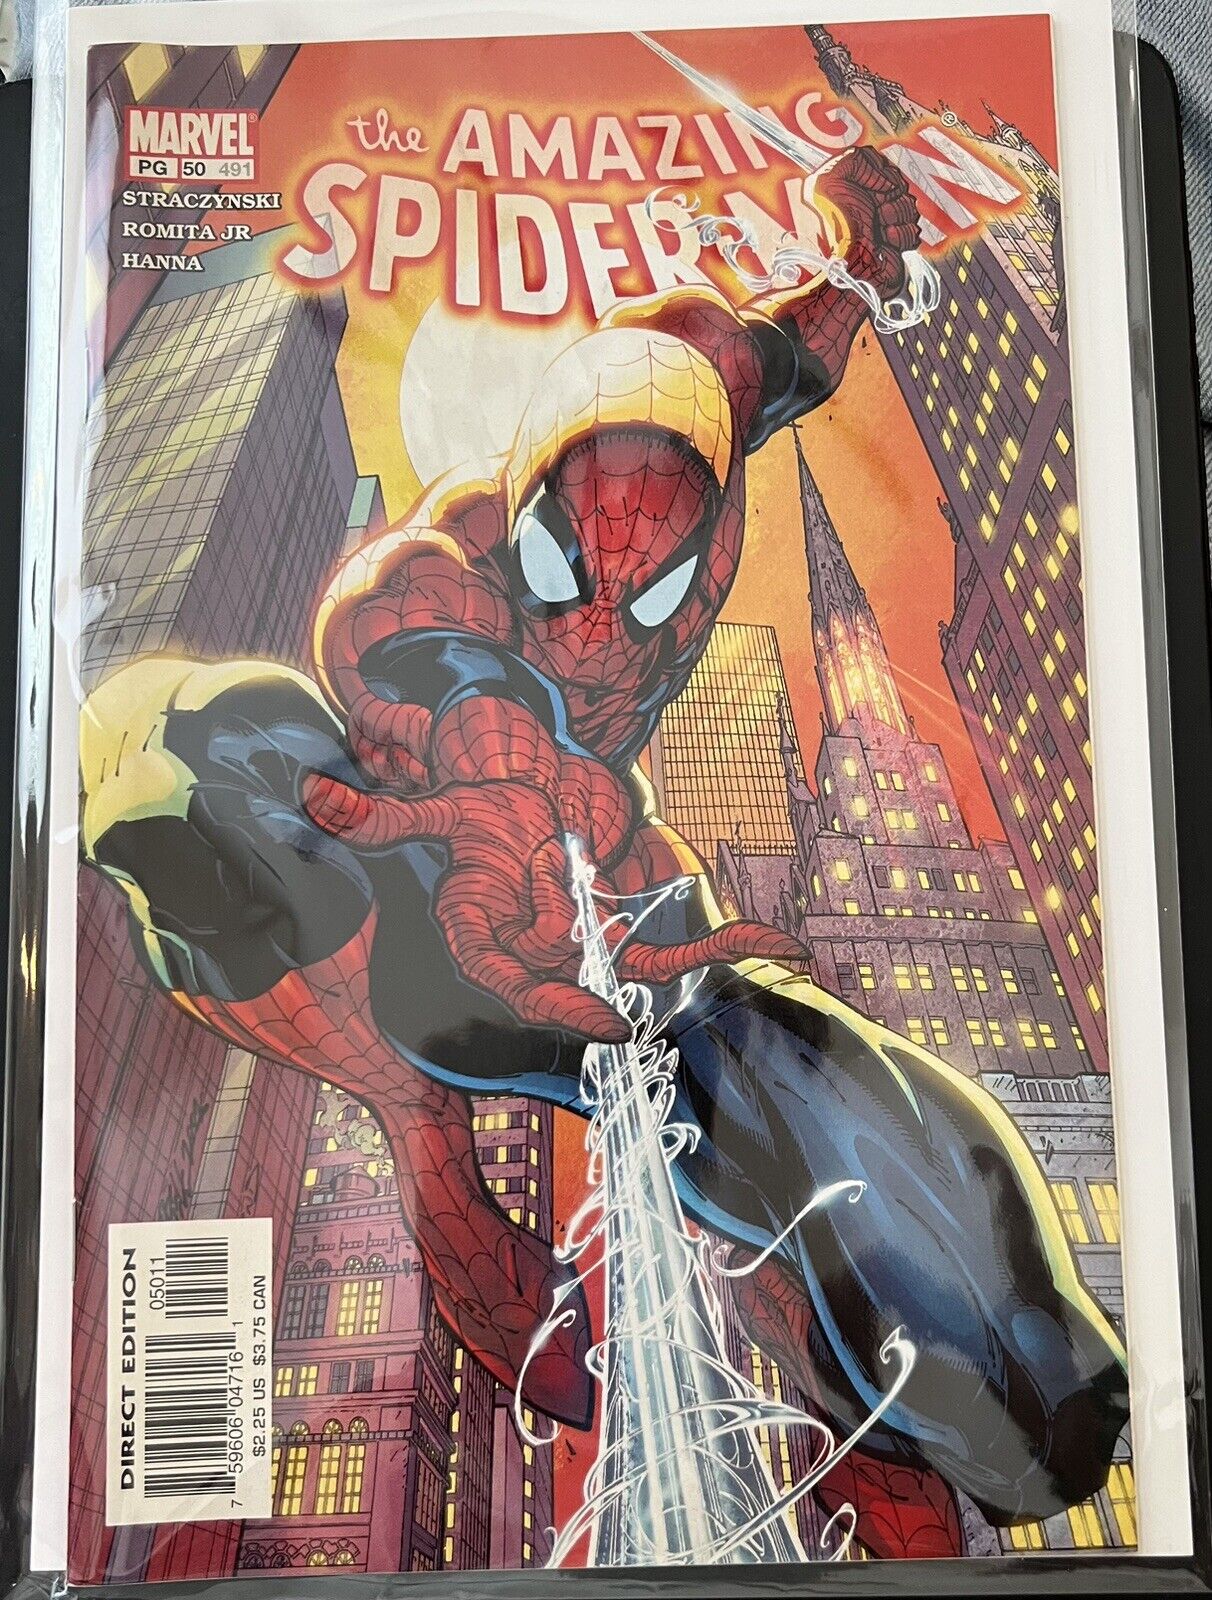 The Amazing Spider-Man #50 (491) (Marvel Comics April 2003)